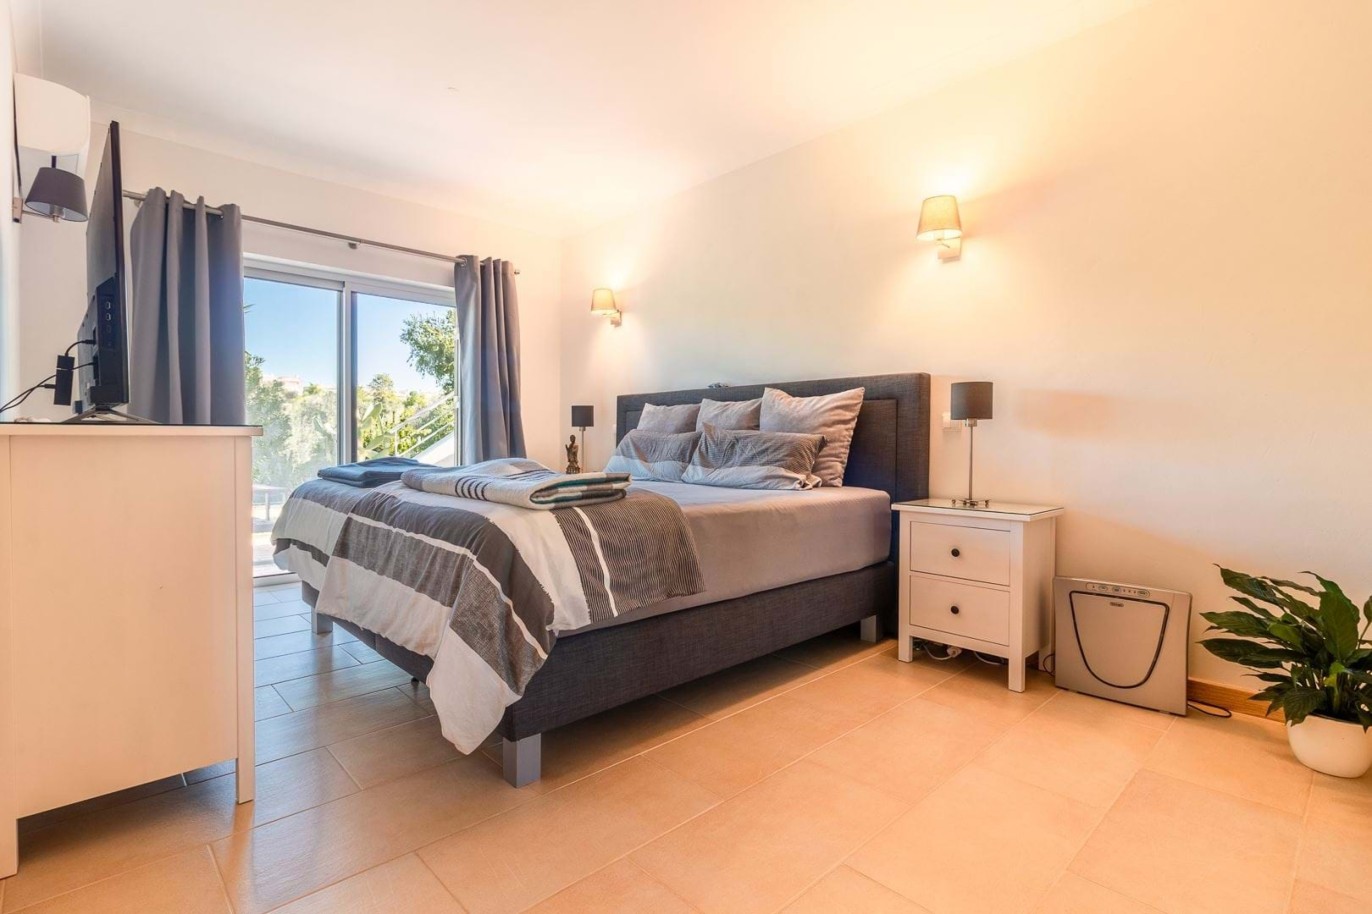 3 Bedroom Villa with swimming pool, for sale in Carvoeiro, Algarve_215288